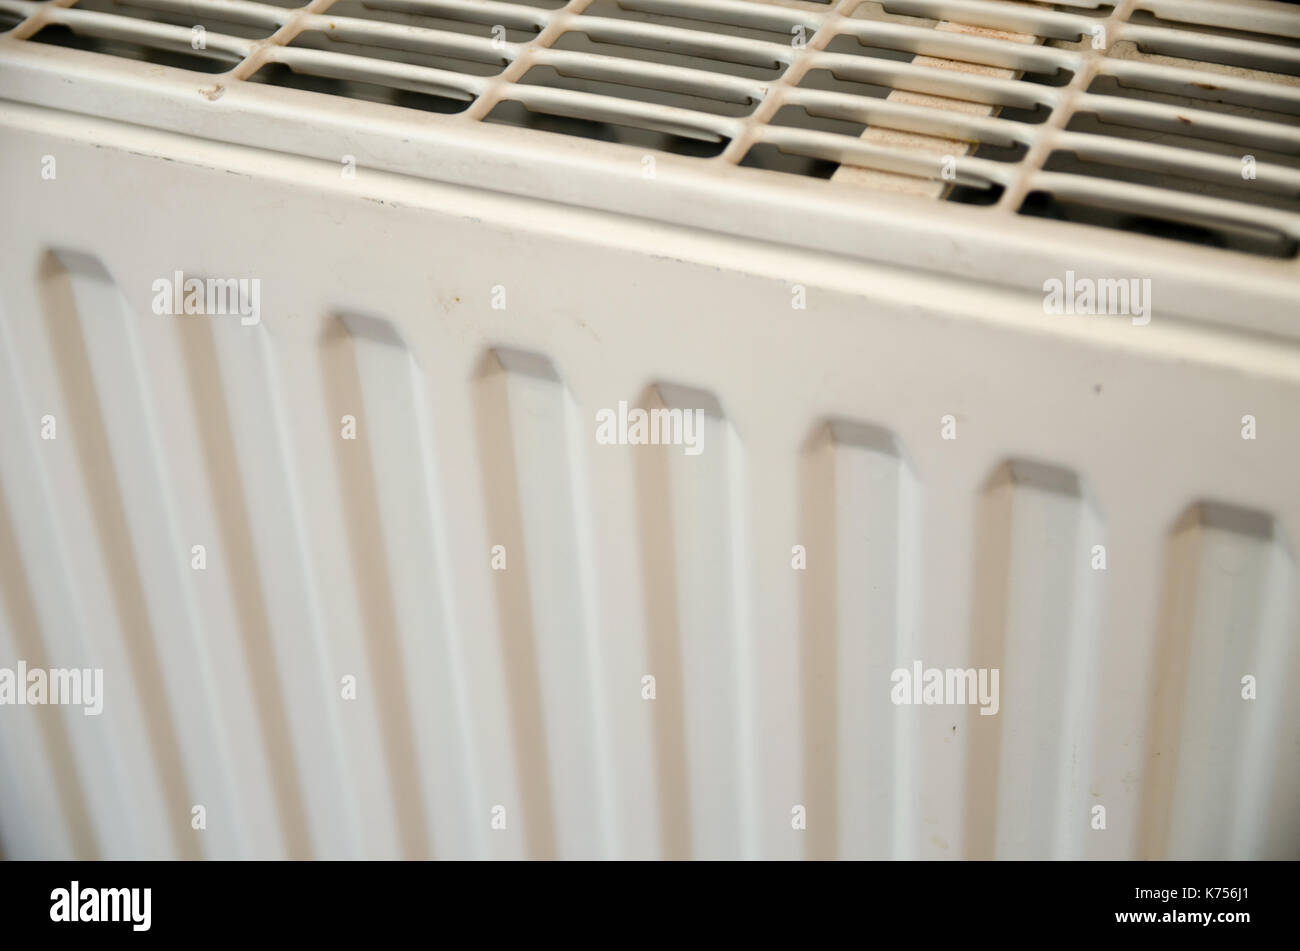 Central heating radiator Stock Photo